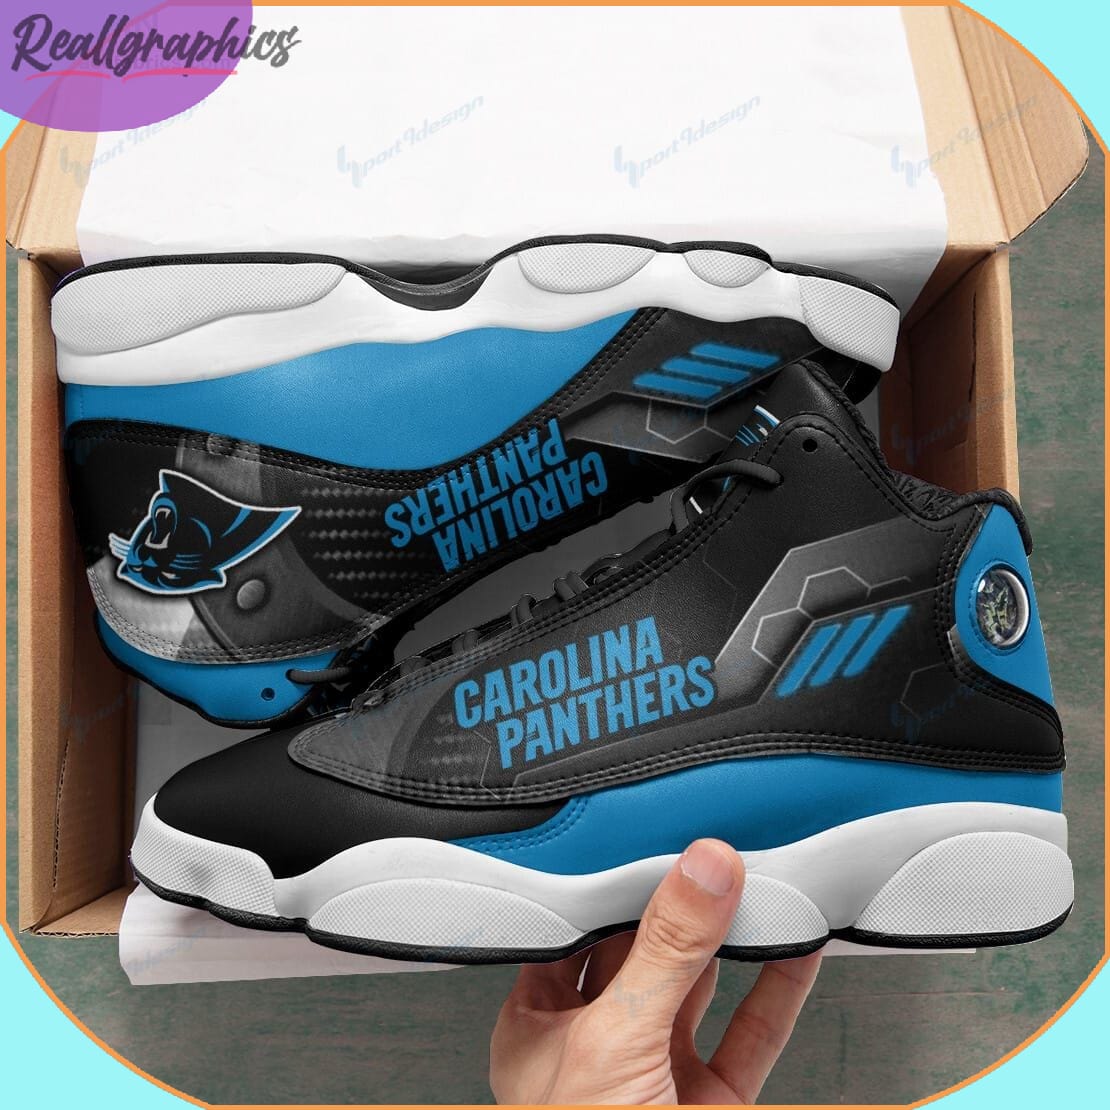 Carolina Panthers Air Jordan 13 Sneakers - Reallgraphics